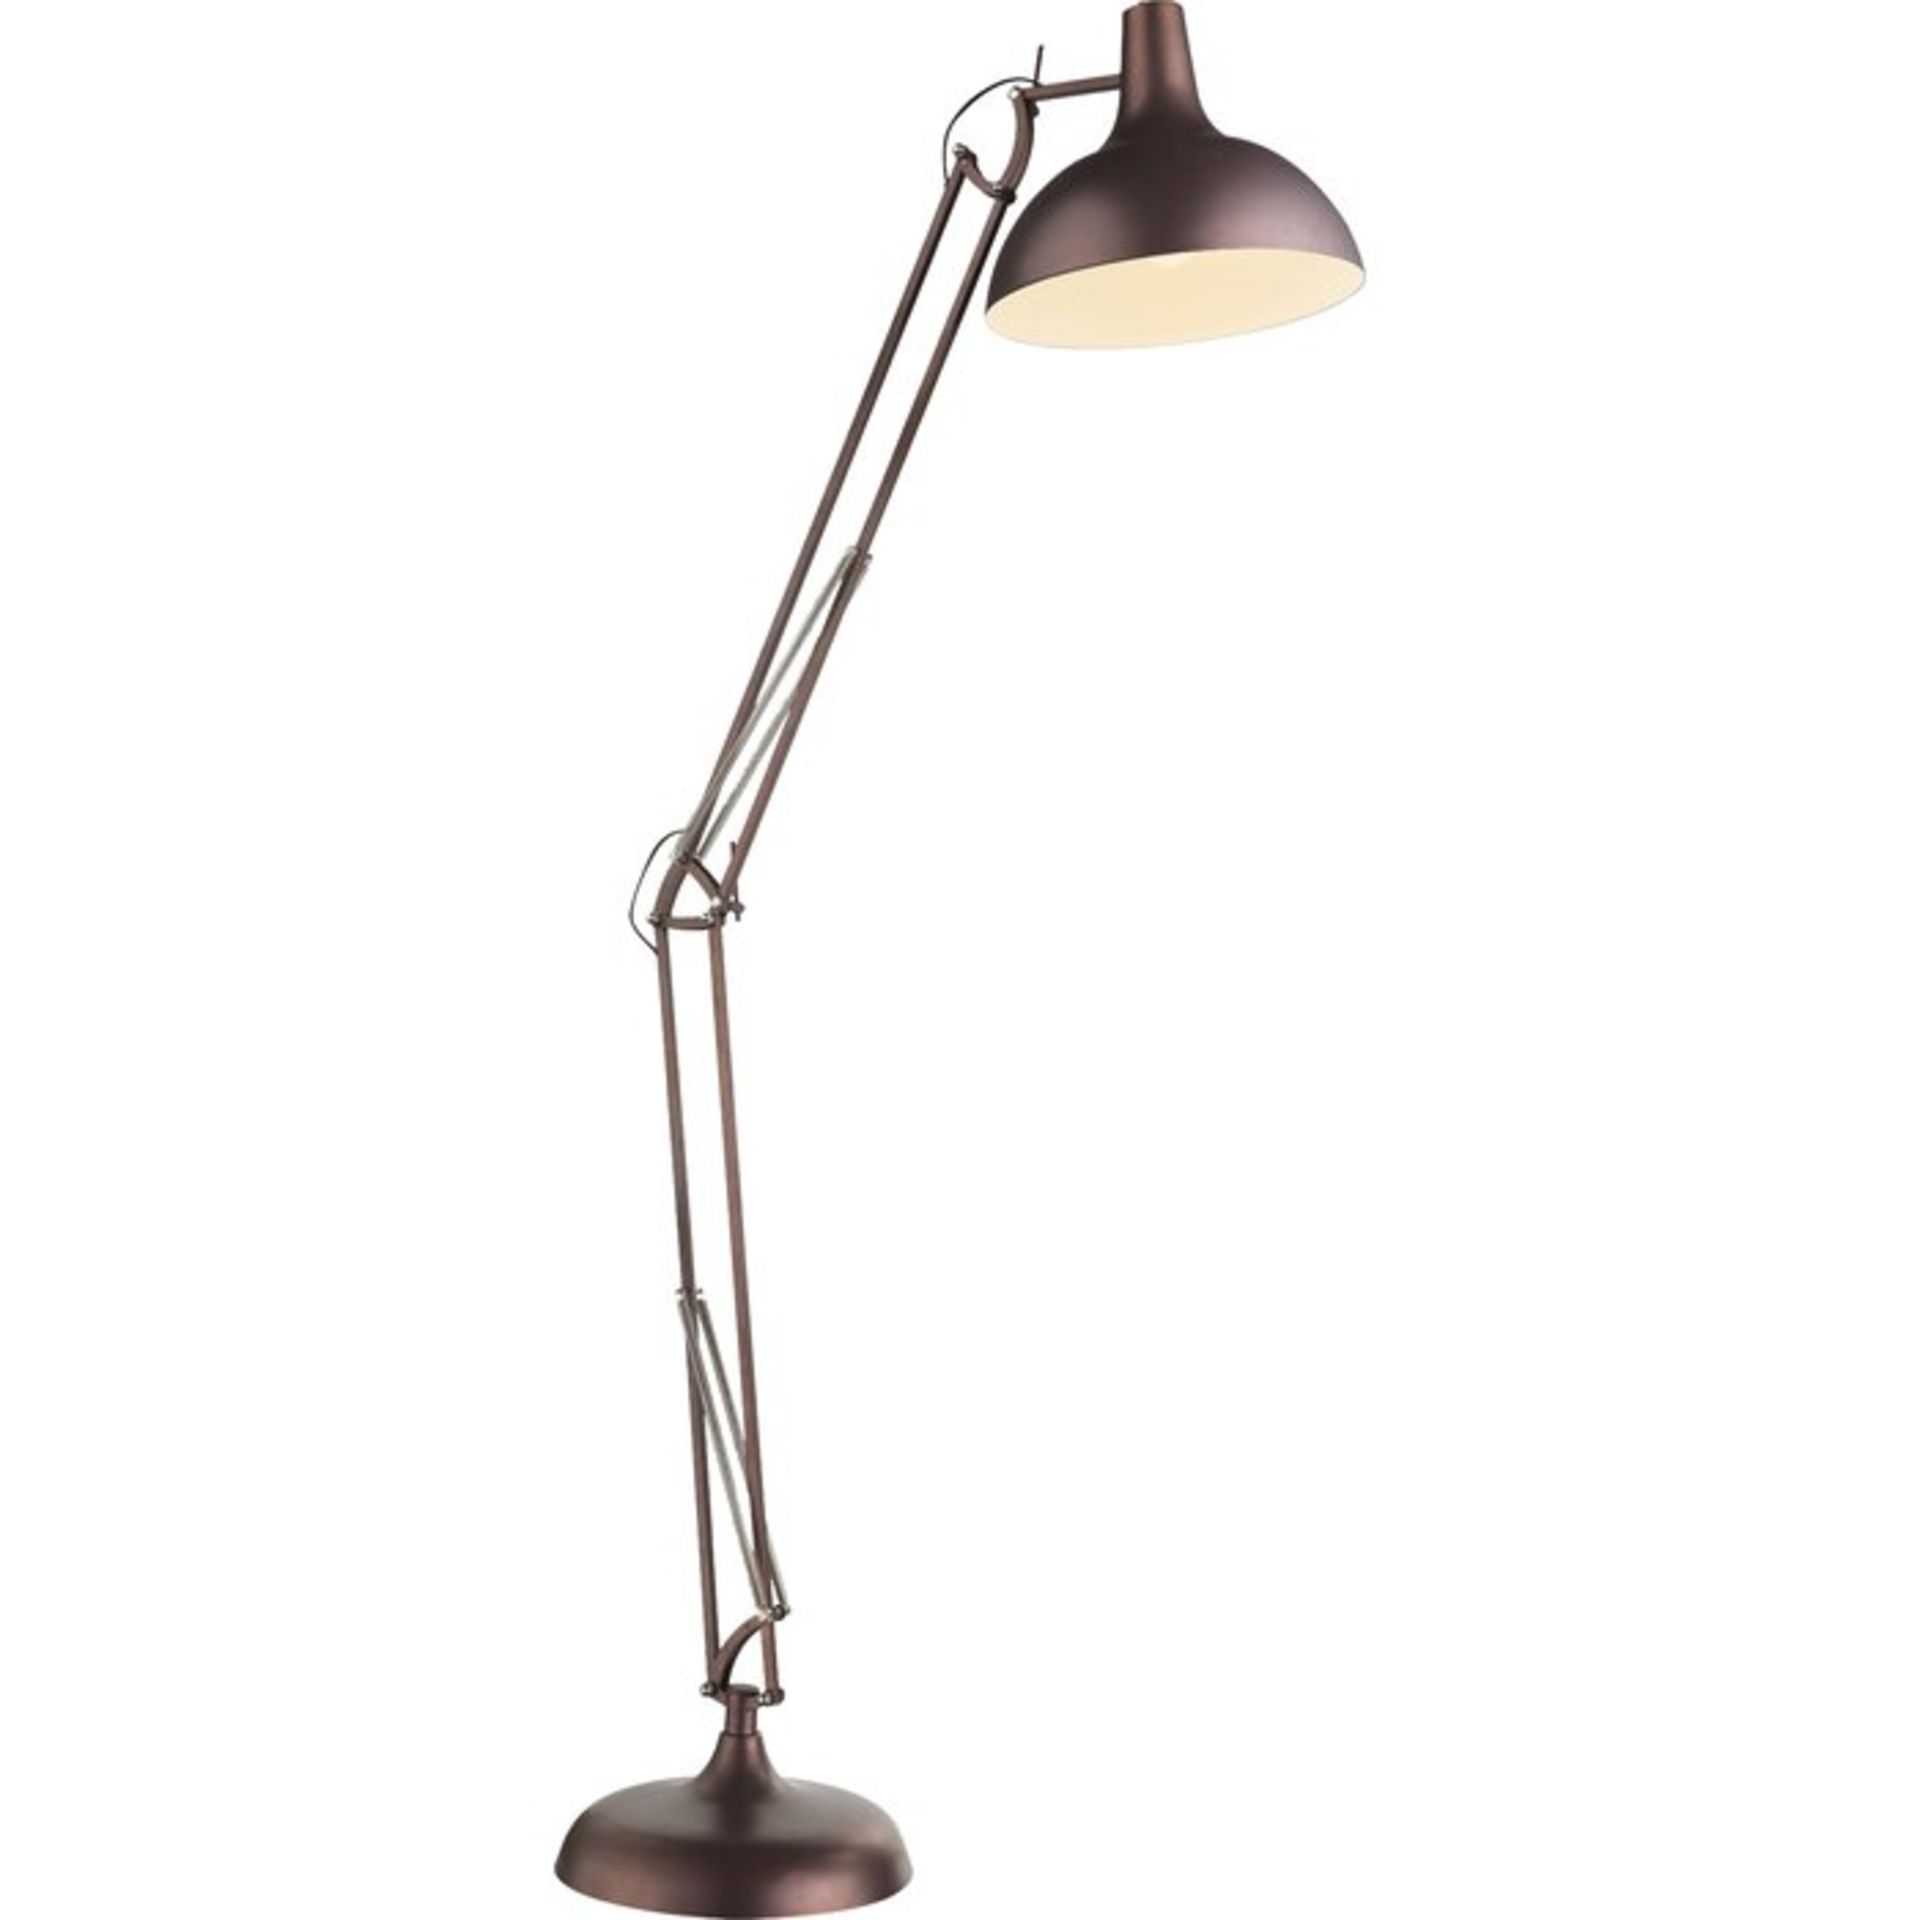 Trey 217cm Reading Floor Lamp - RRP £189.99 - Image 2 of 2